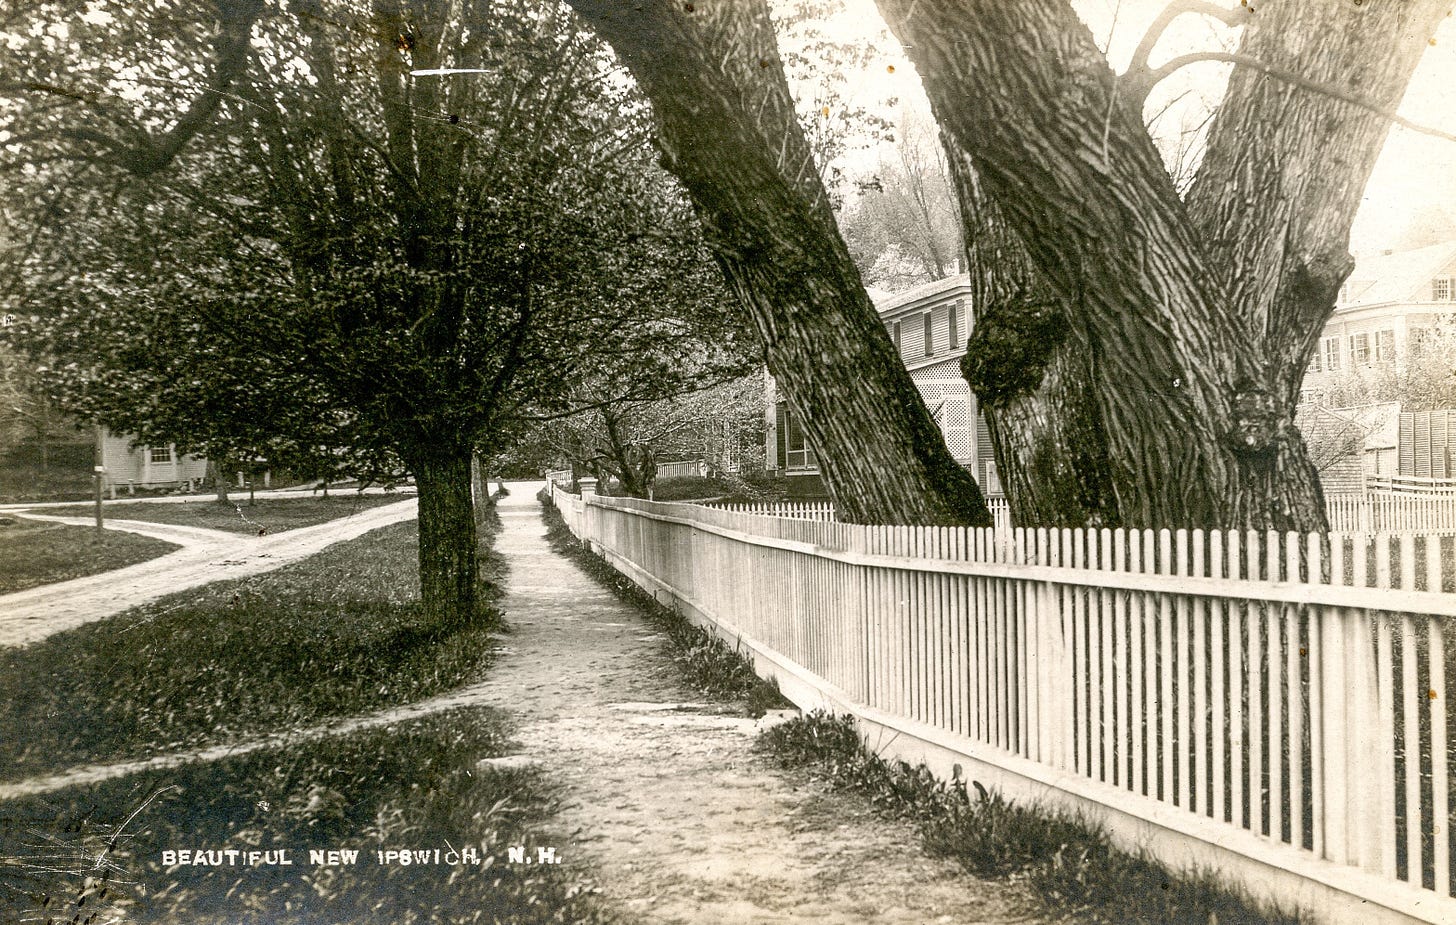 Sidewalk with white picket fence